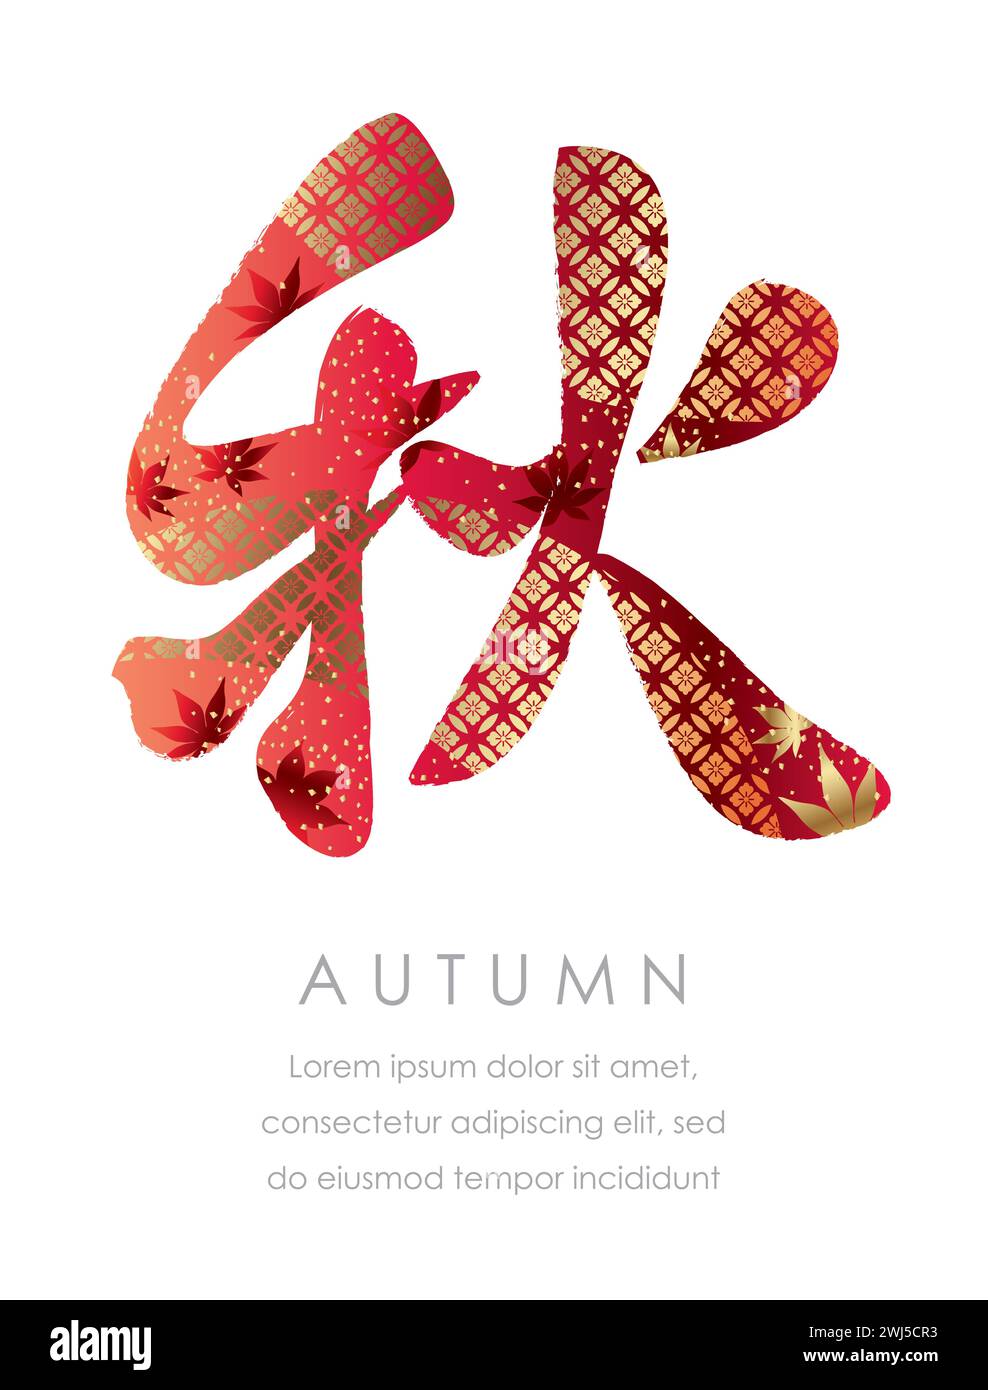 Japanische Kanji-Figur Kalligraphie, AKI, dekoriert mit Vintage-Mustern, Vektor-Illustration. Textübersetzung - Herbst Stock Vektor